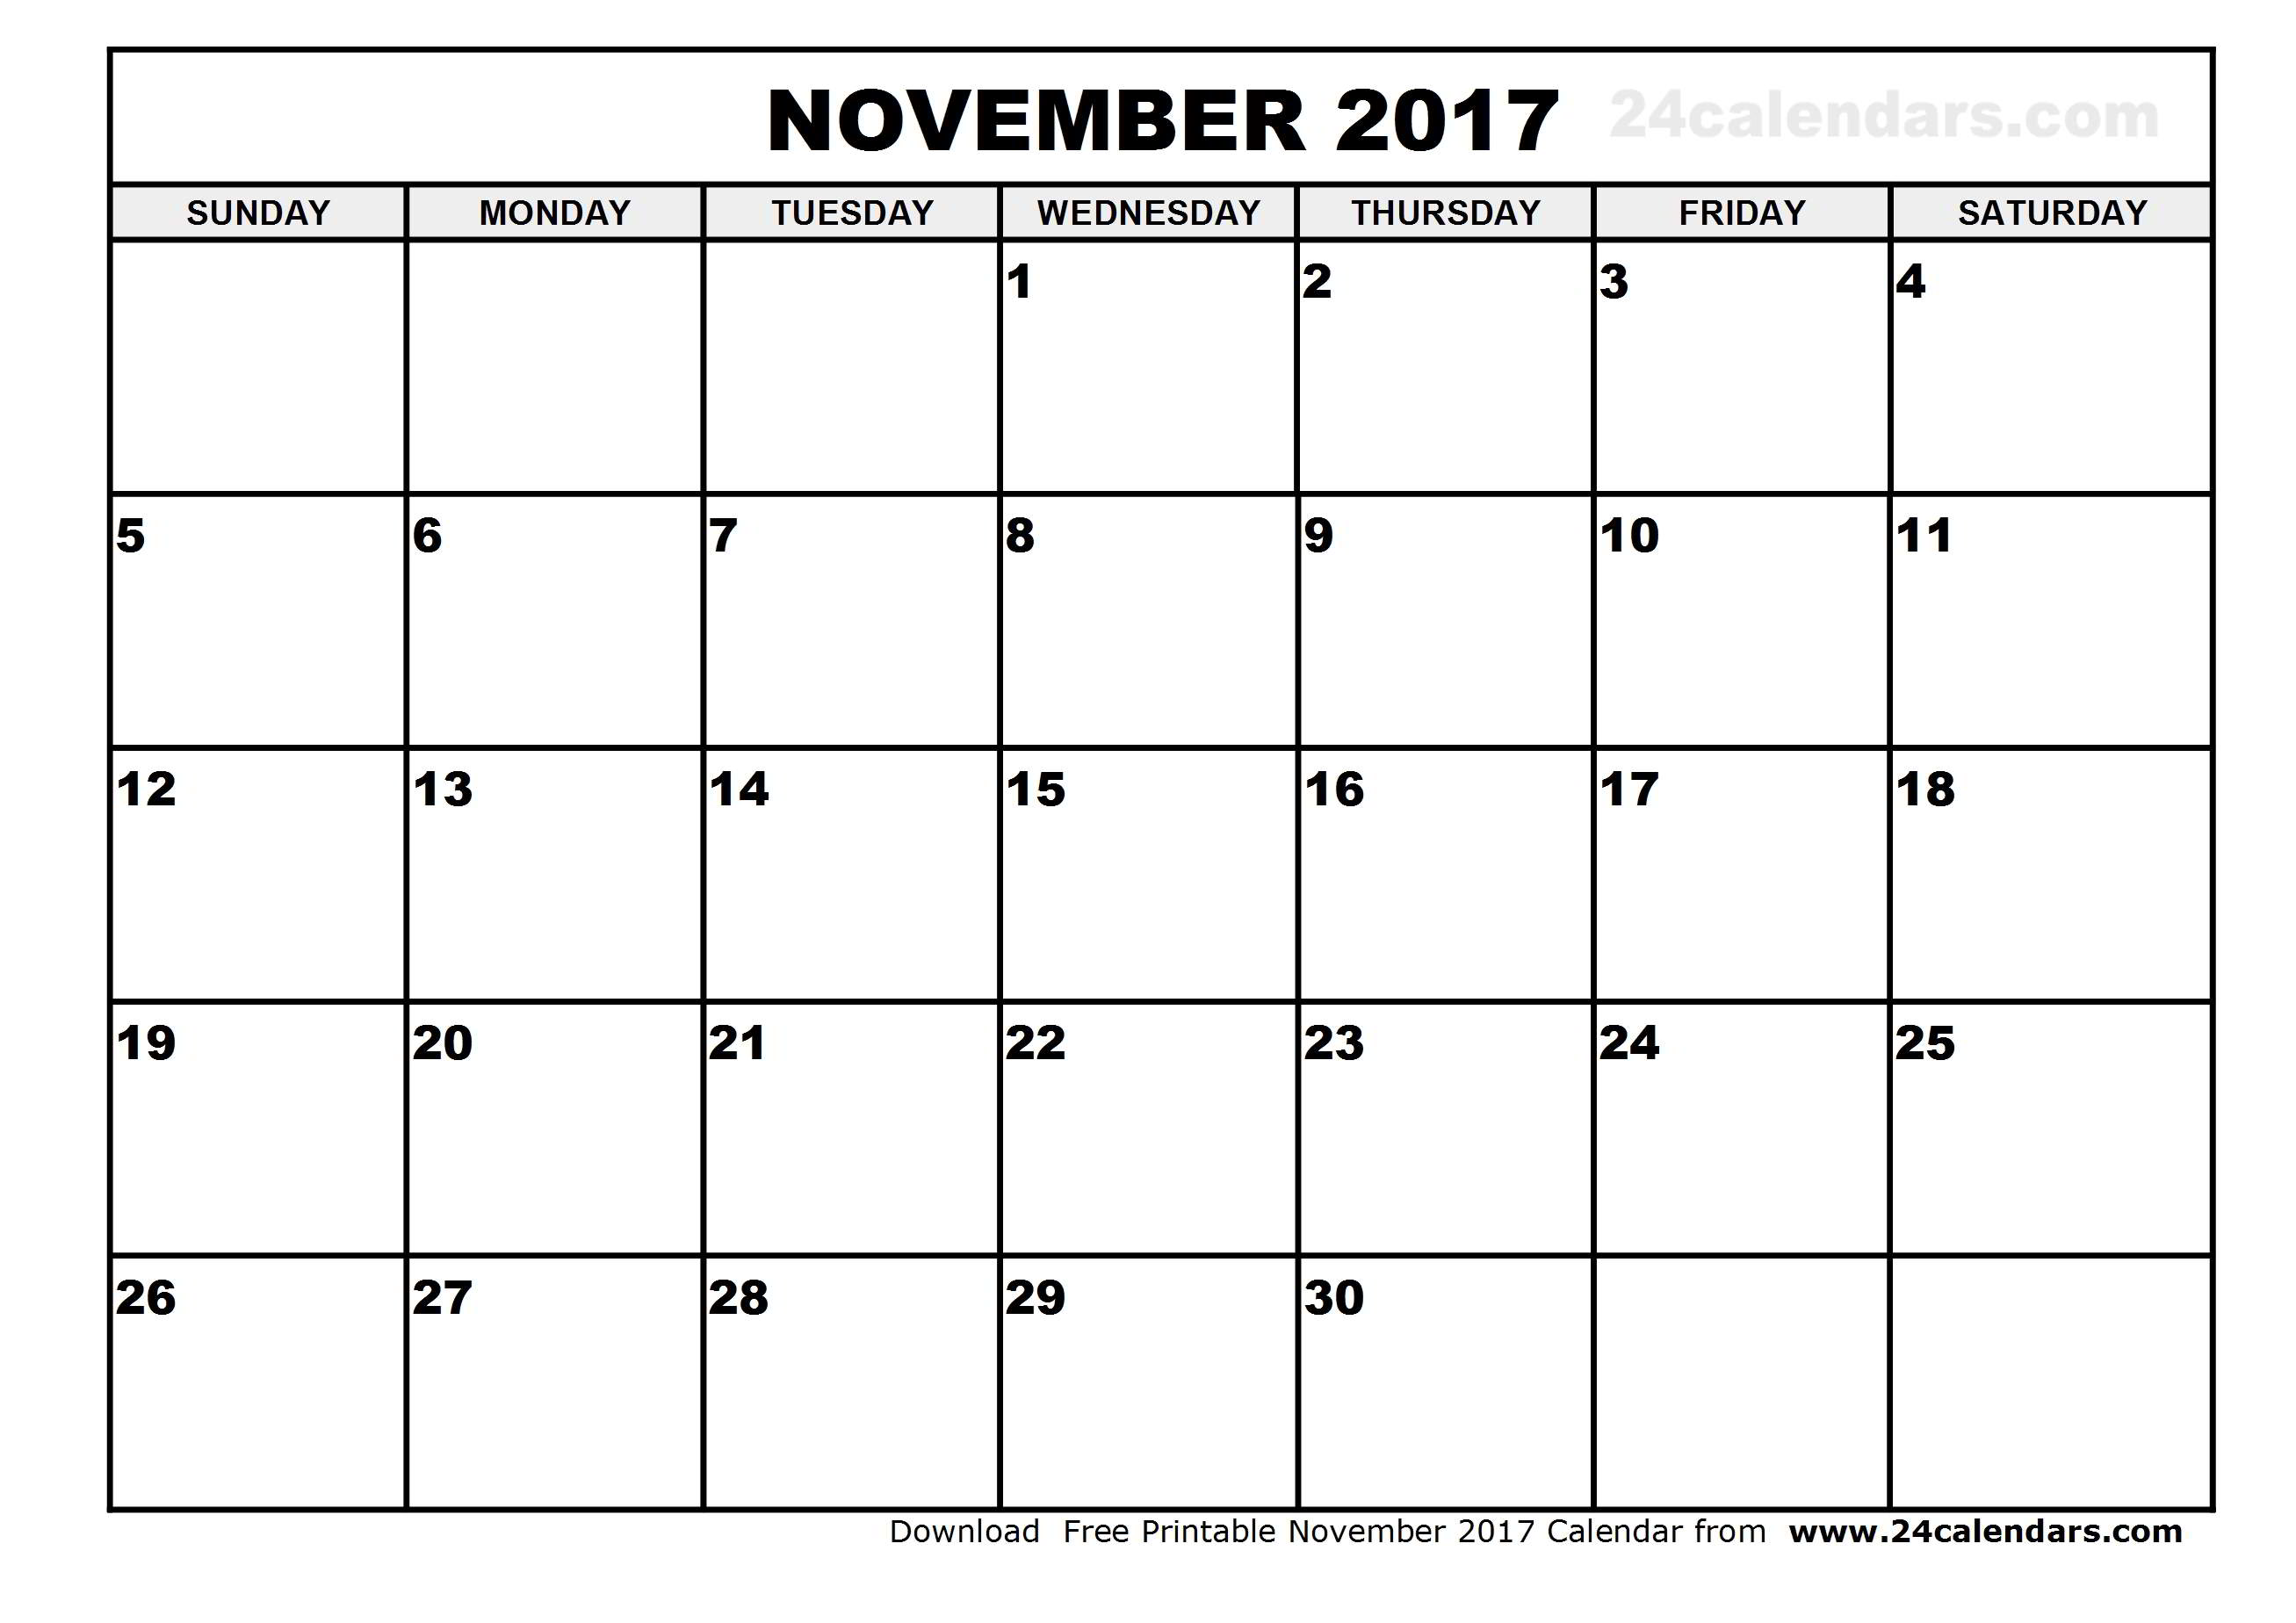 November 2017 Calendar Printable